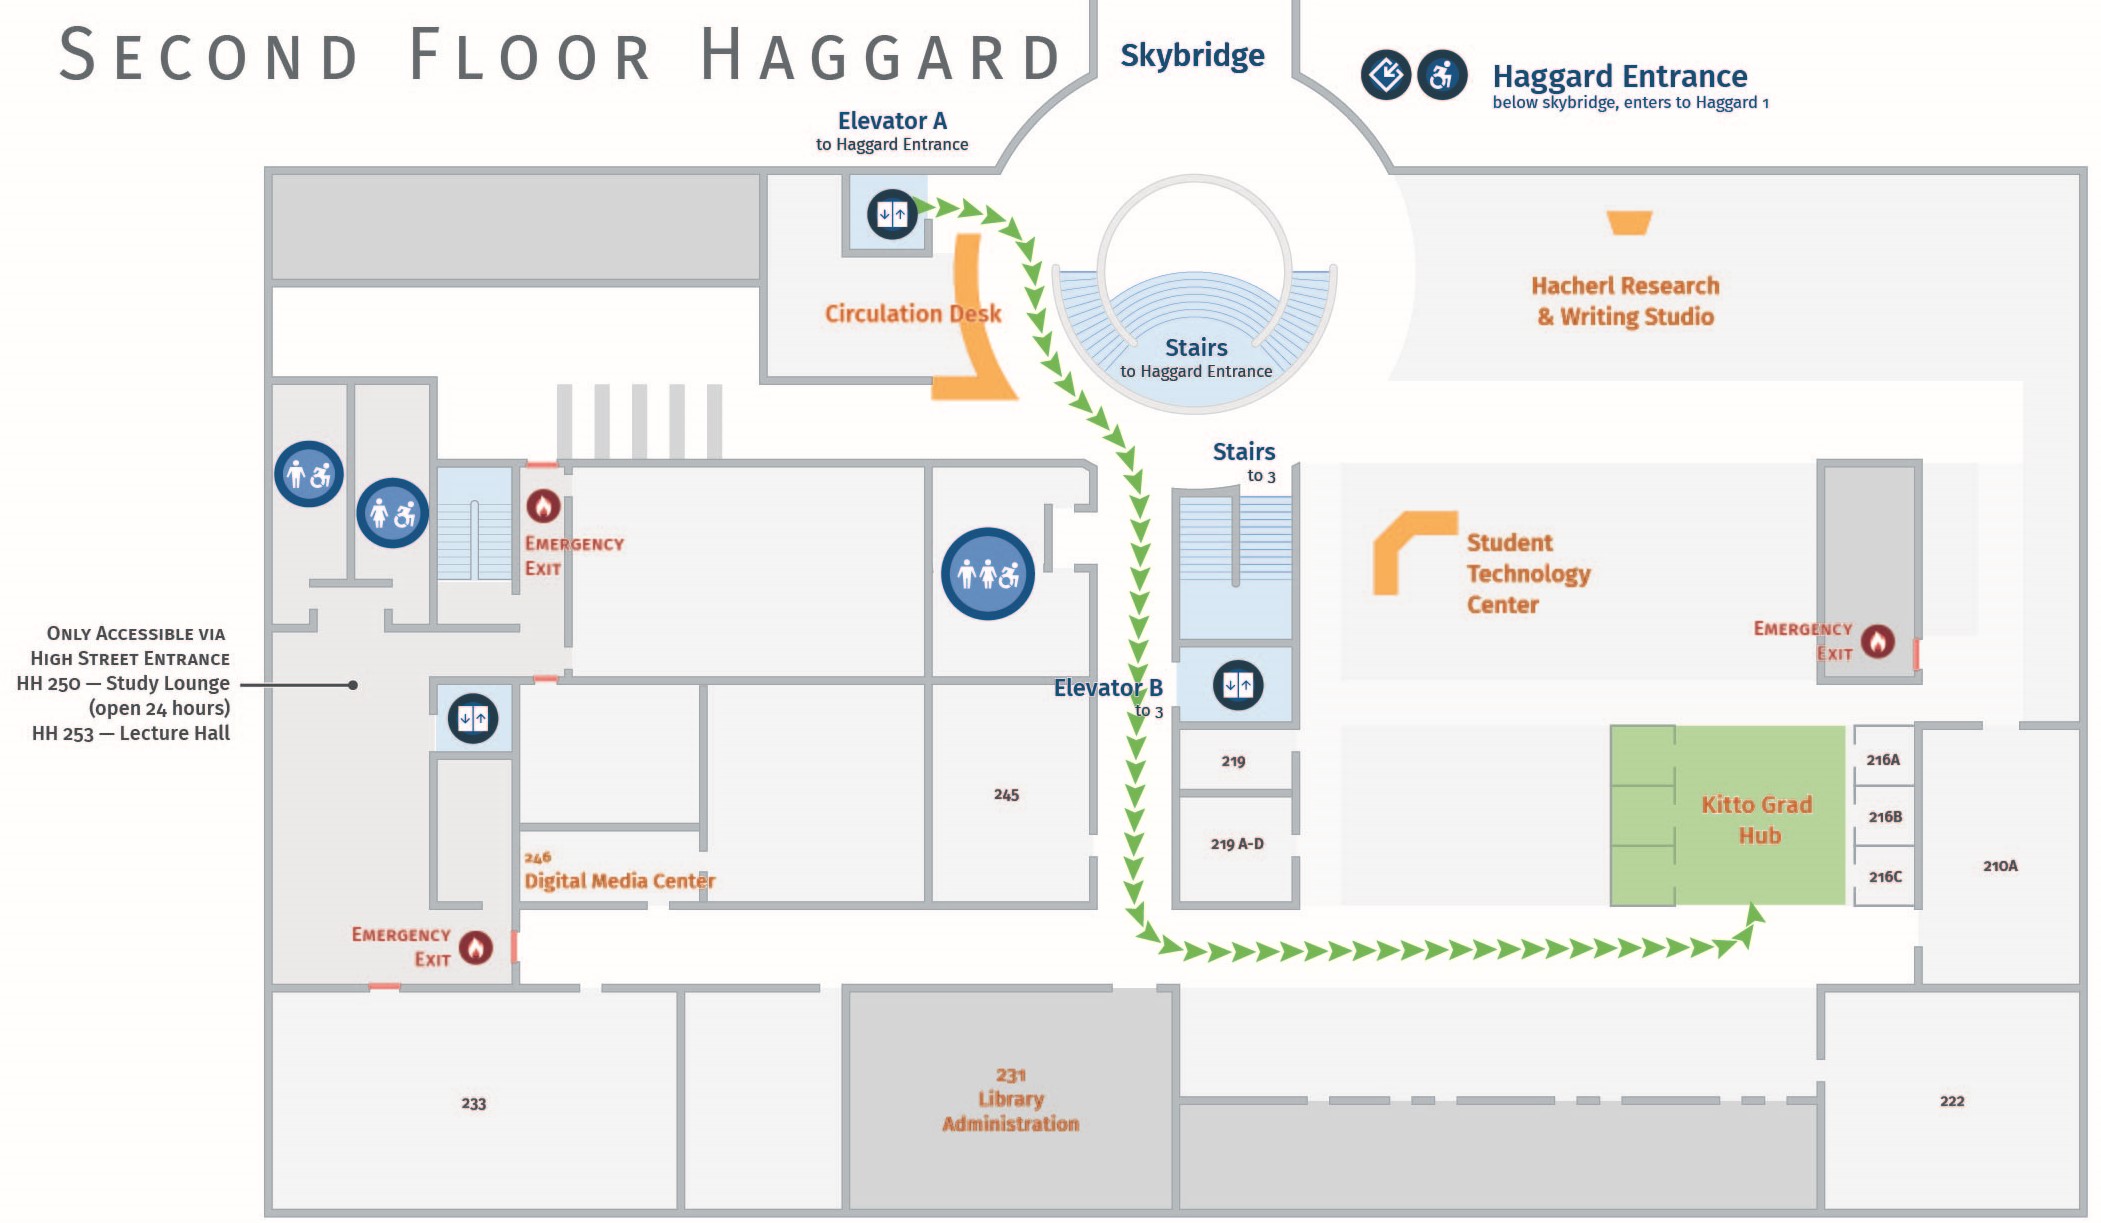 Floor plan, second floor of Haggard with accessible path to the Kitto Grad Hub; Haggard 216.